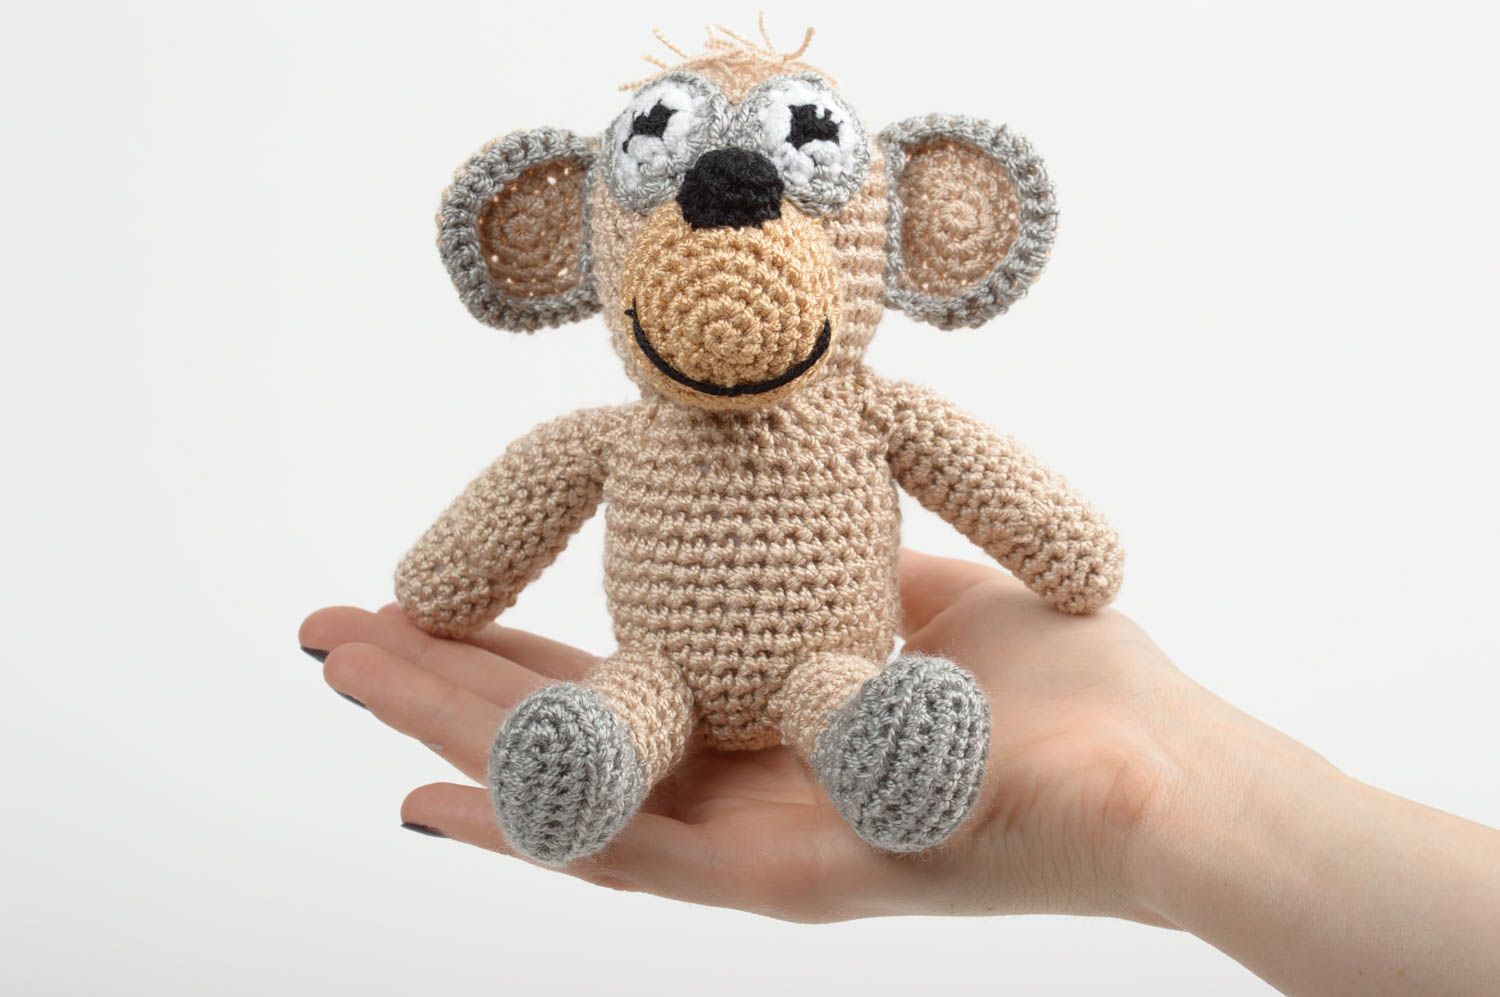 Handmade toy crochet stuffed animals nursery decor gift ideas for kids photo 1